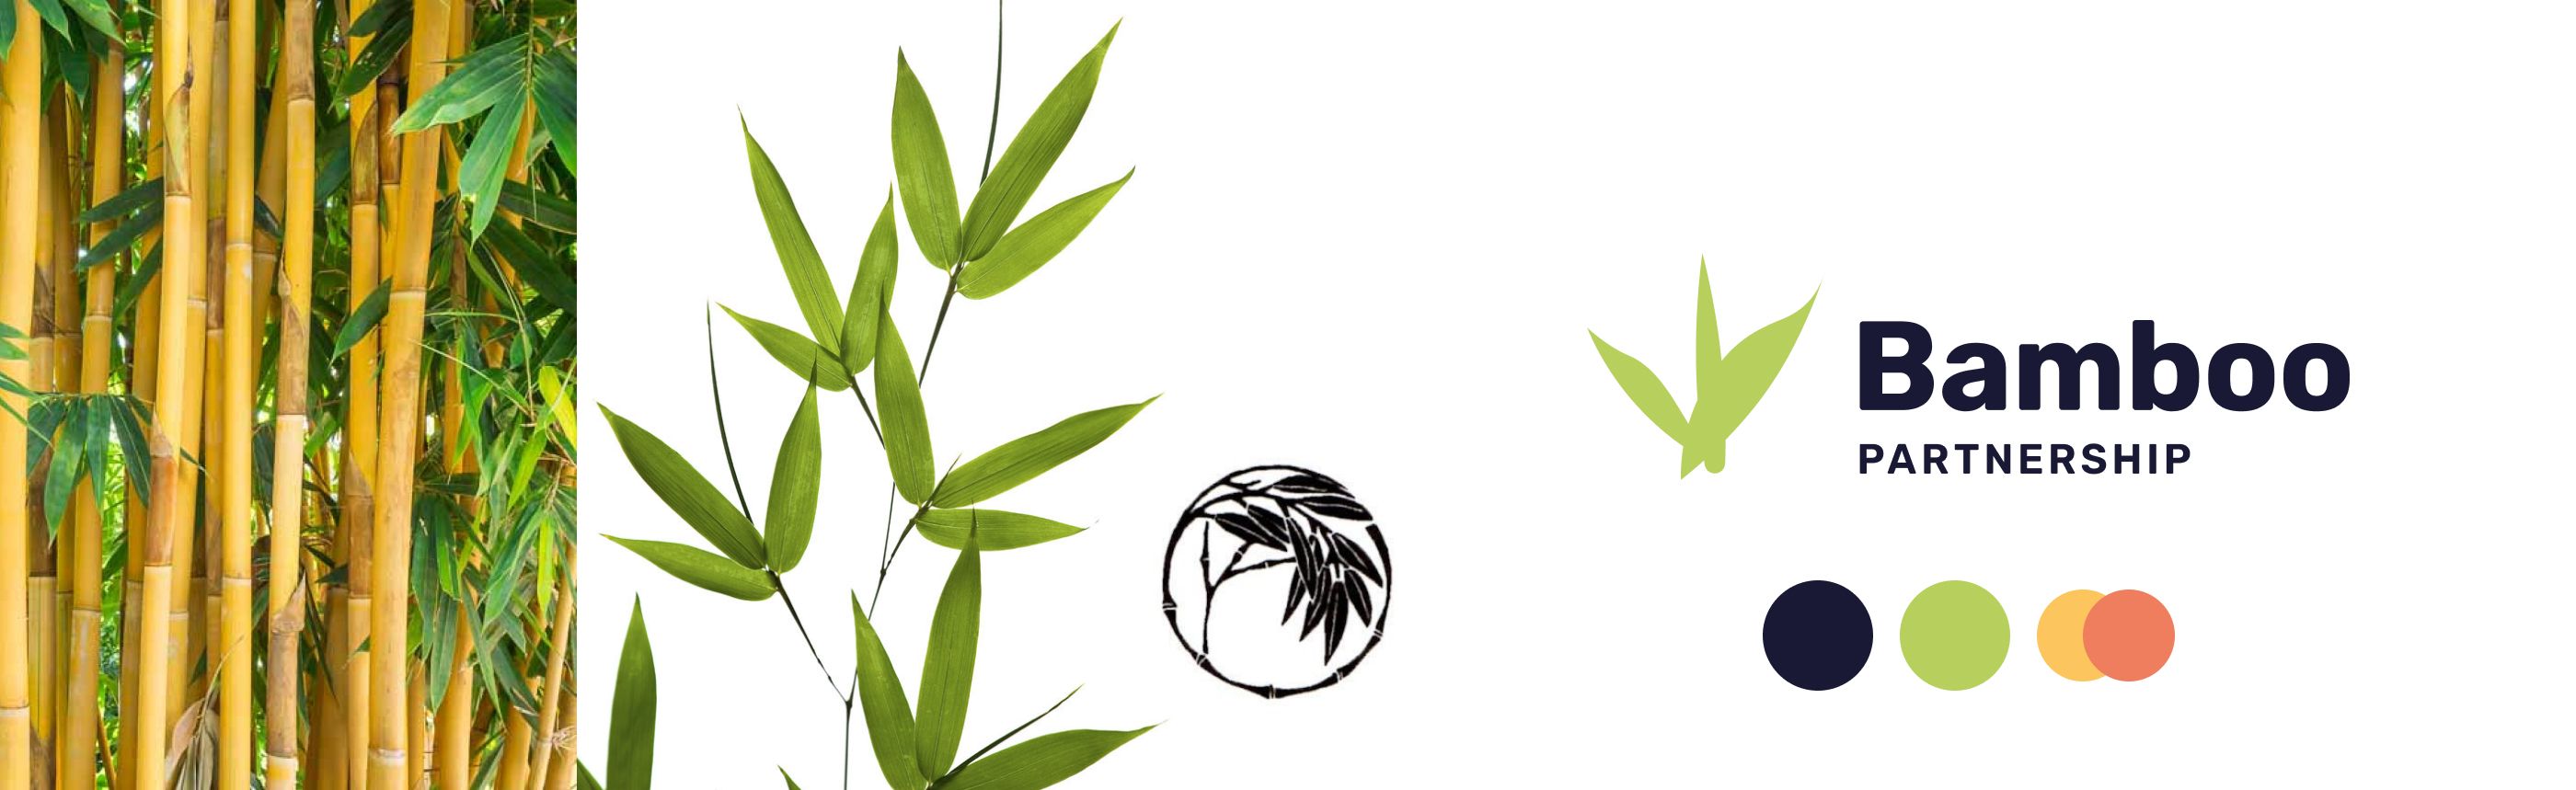 Bamboo Partnership Logo Stylescapes